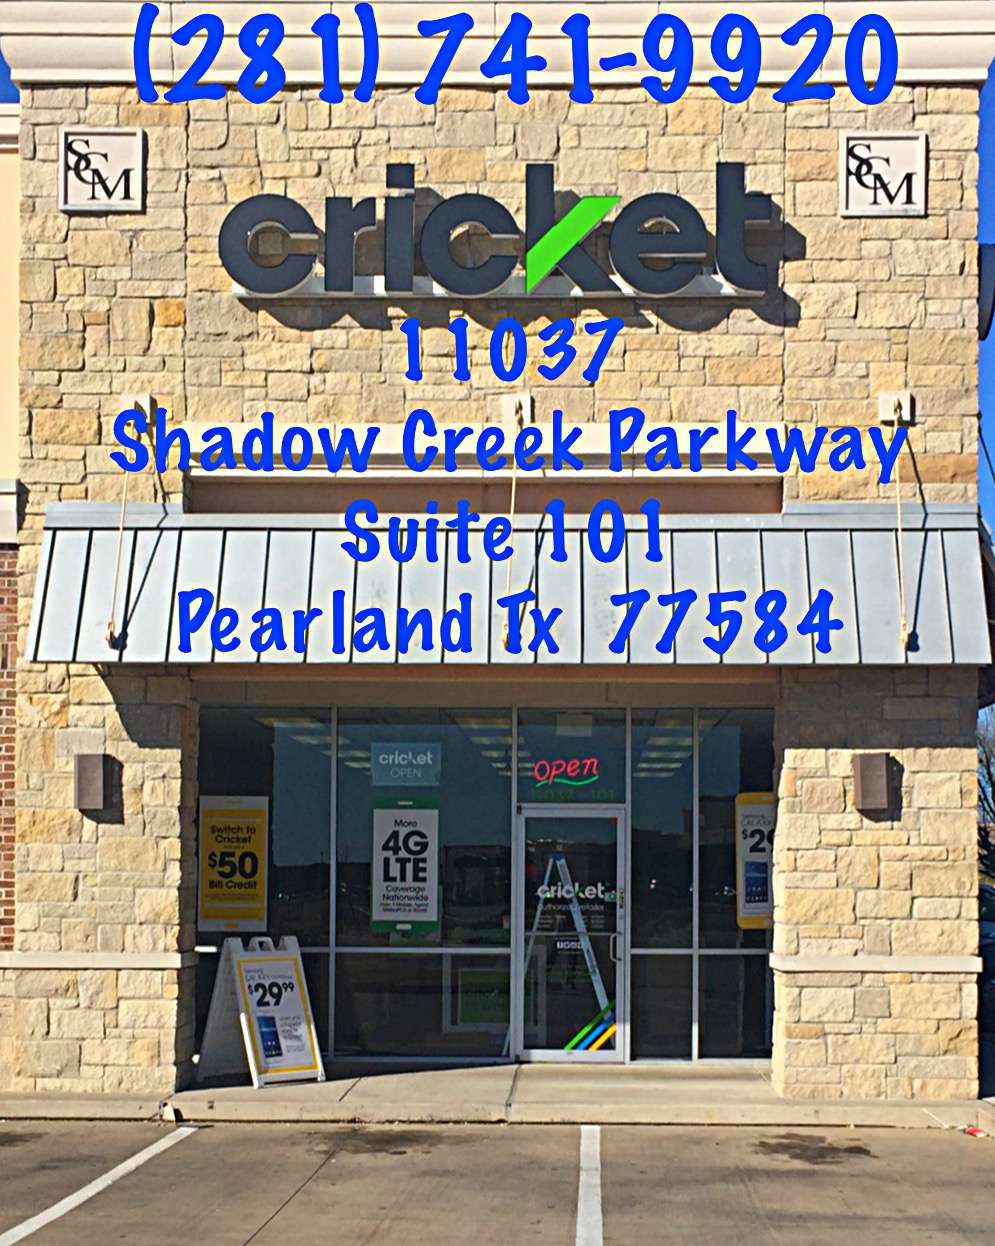 Cricket Wireless Authorized Retailer | 11037 Shadow Creek Pkwy, Pearland, TX 77584, USA | Phone: (281) 741-9920